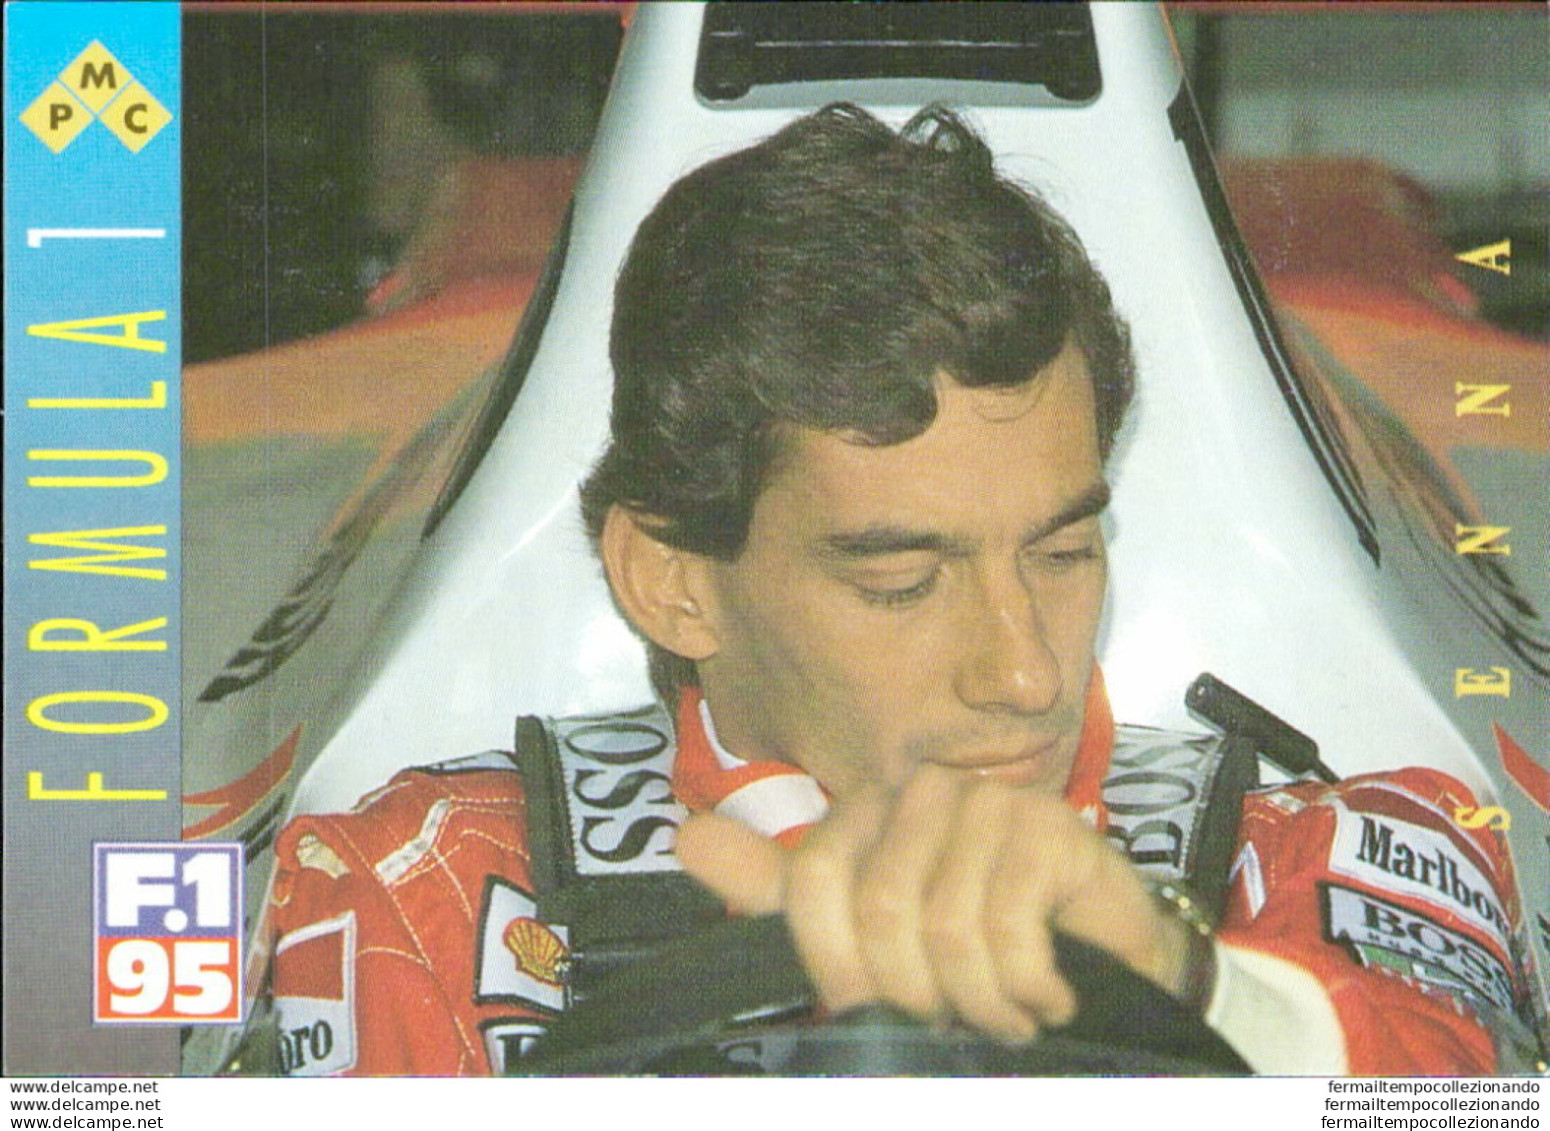 Bh39 1995 Formula 1 Gran Prix Collection Card Senna N 39 - Catalogus